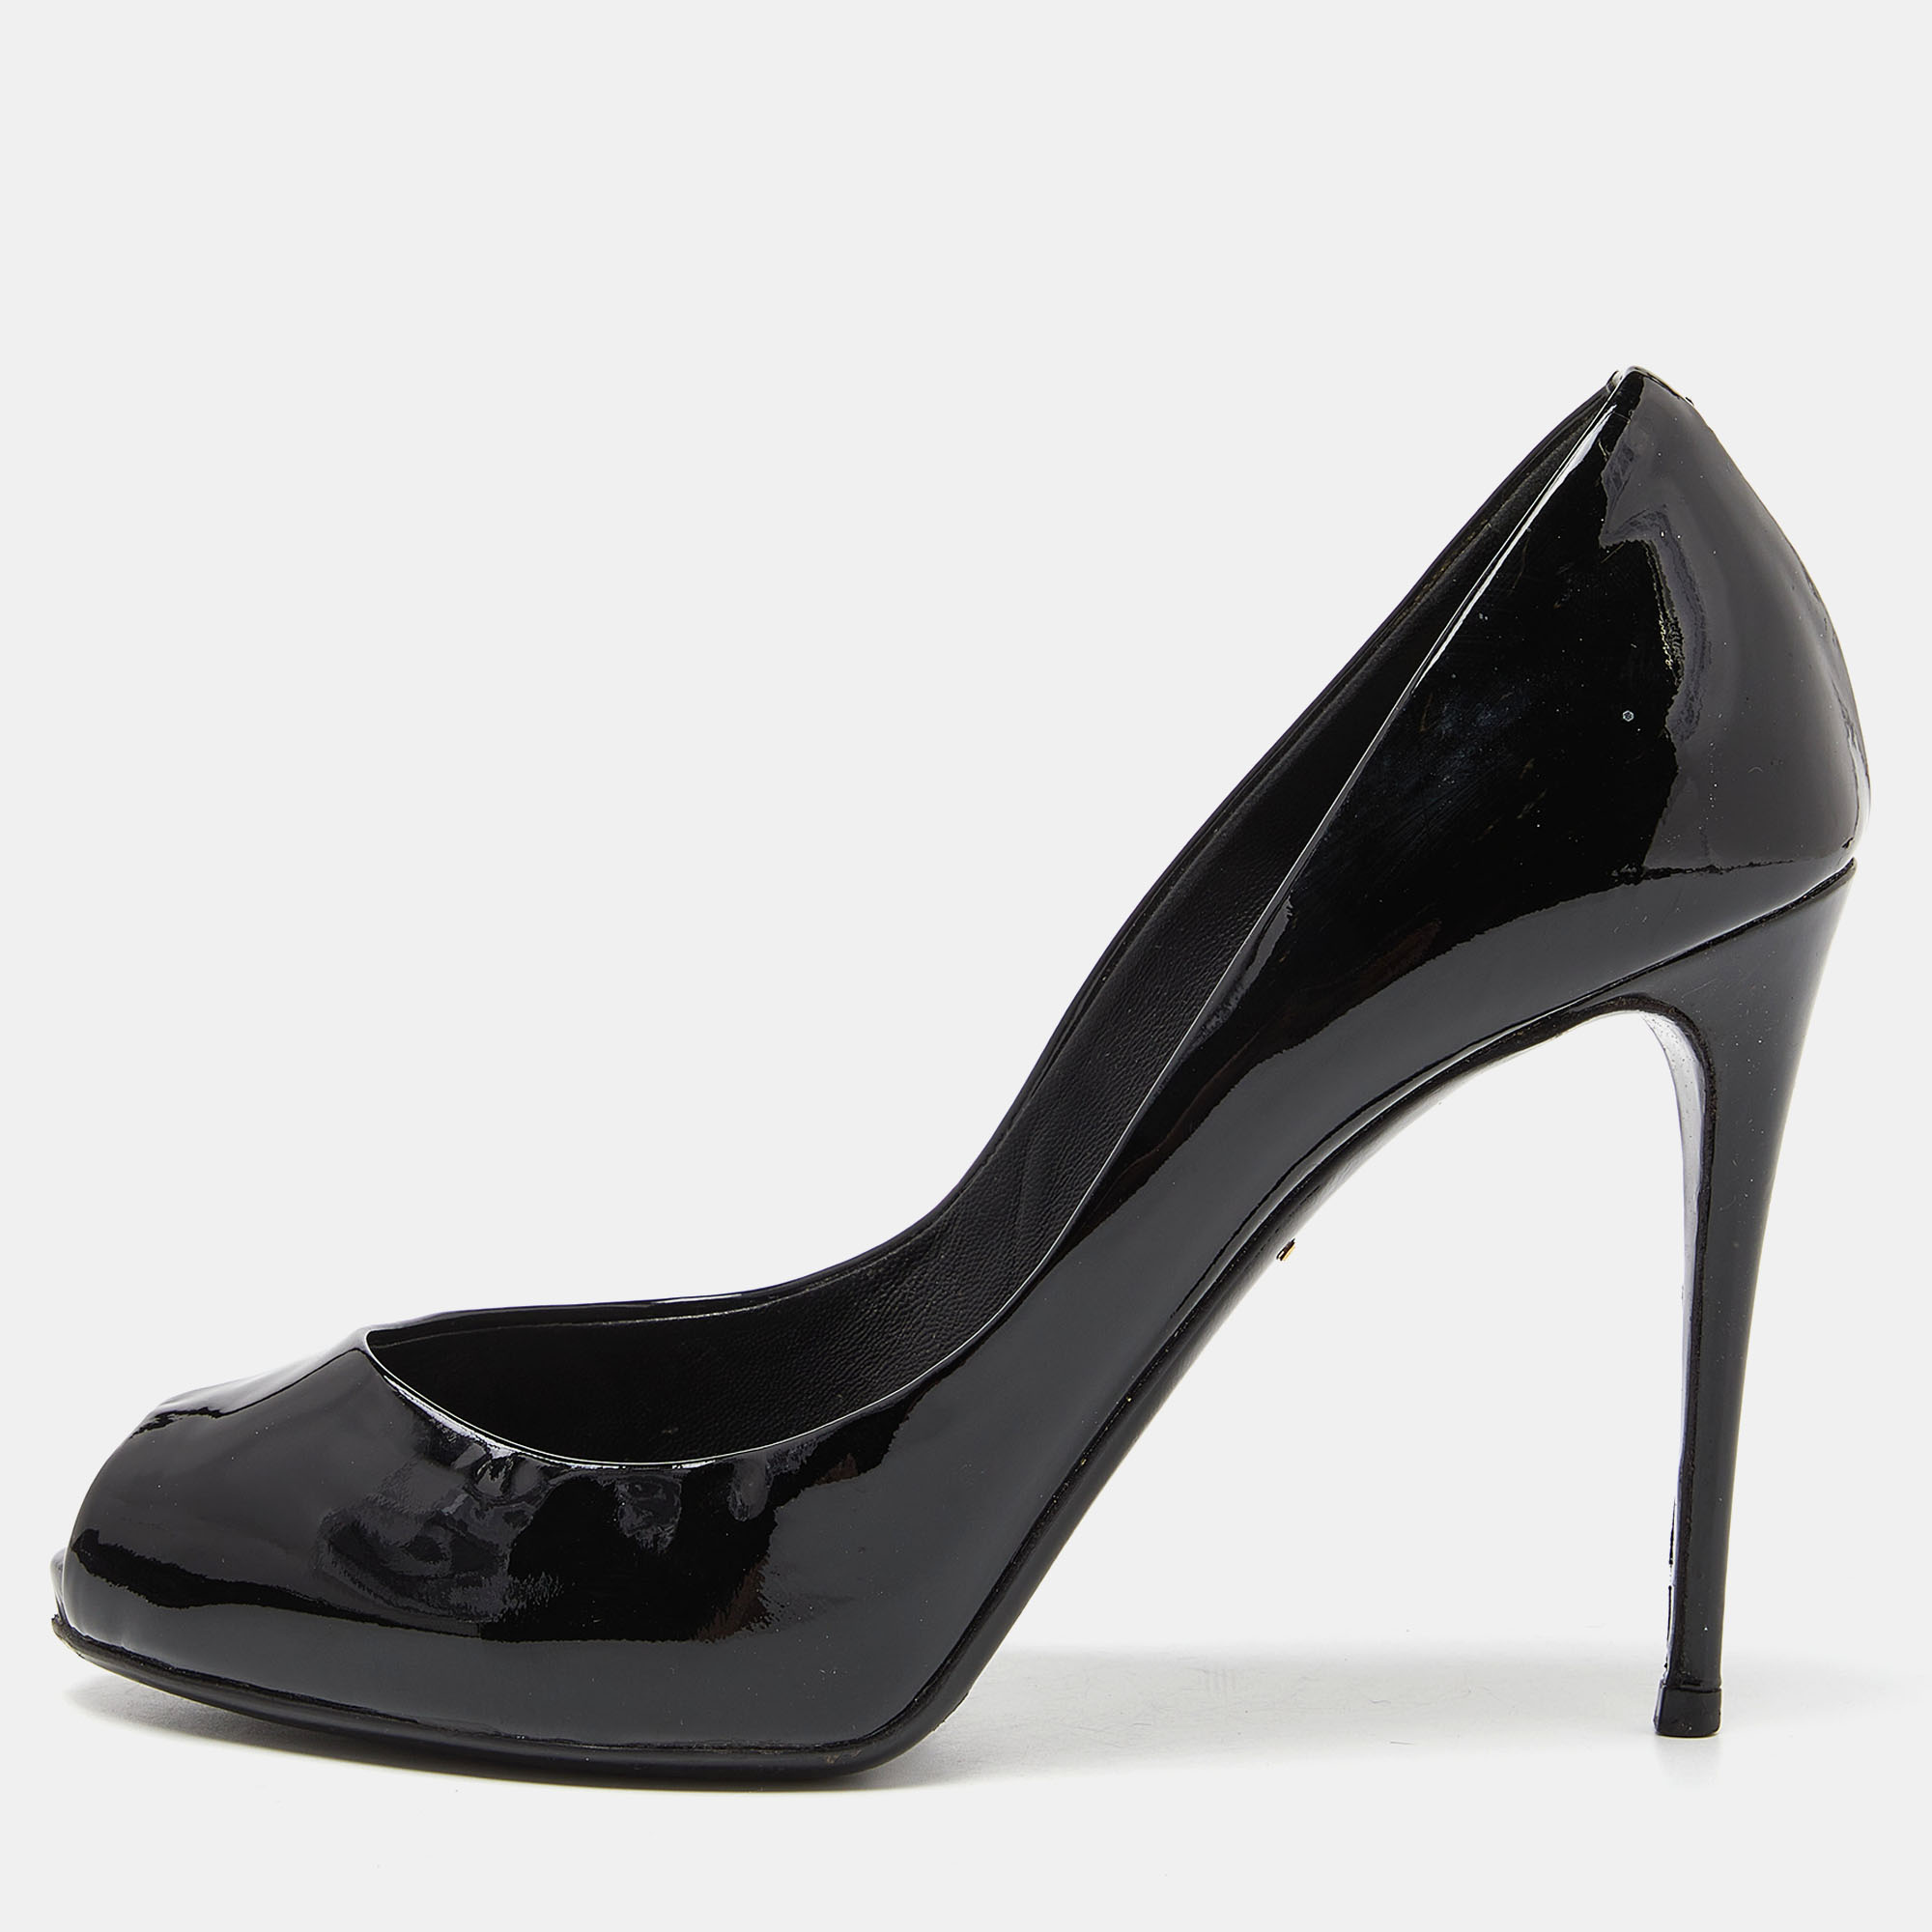 Pre-owned Dolce & Gabbana Black Patent Leather Platform Peep Toe Pumps Size 37